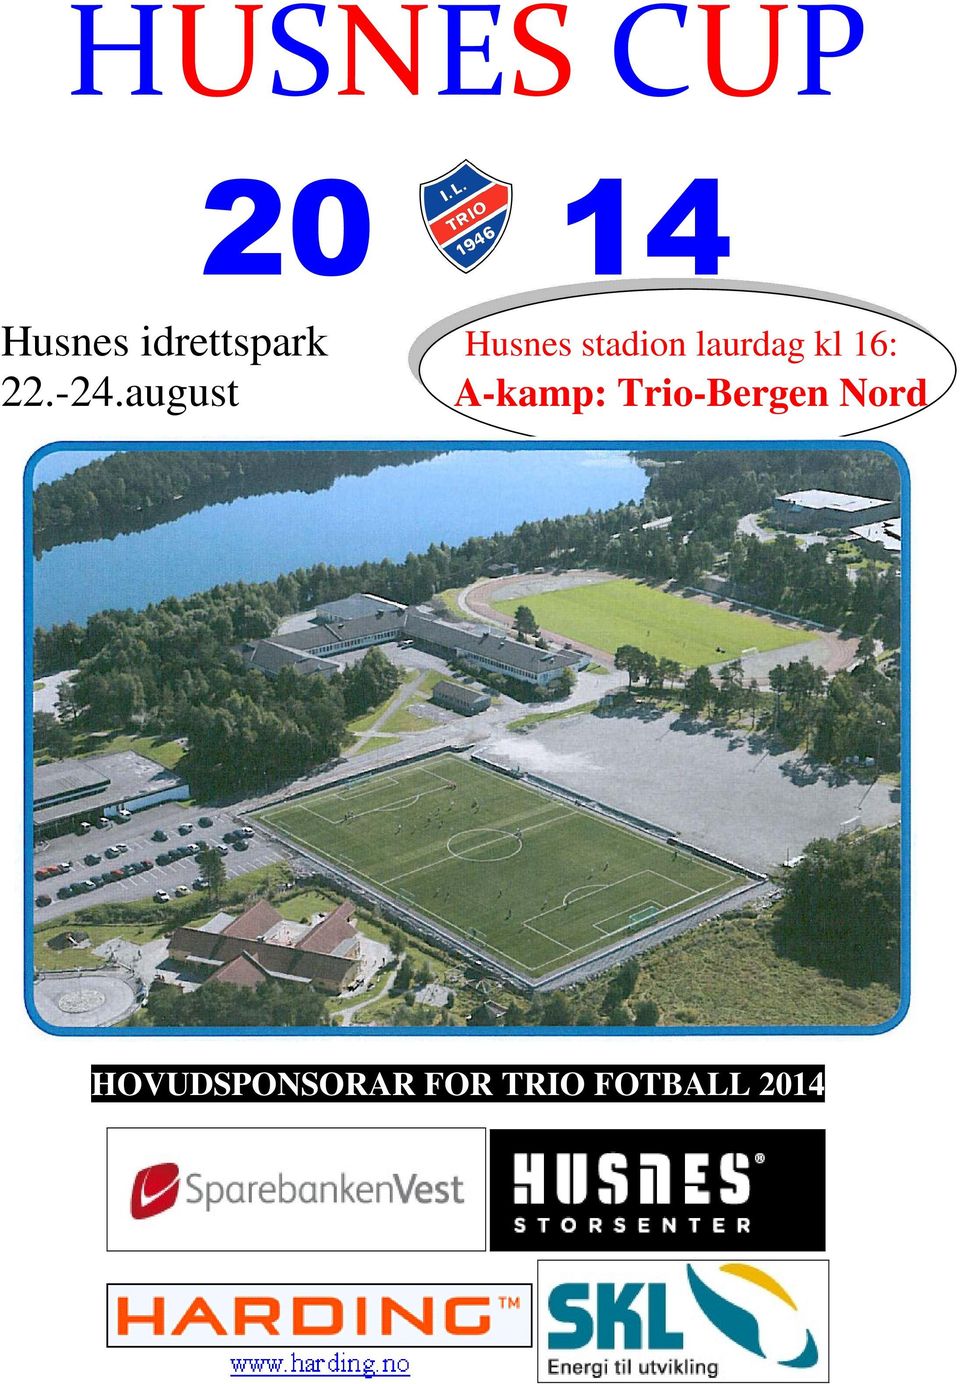 -24.august A-kamp: Trio-Bergen Nord